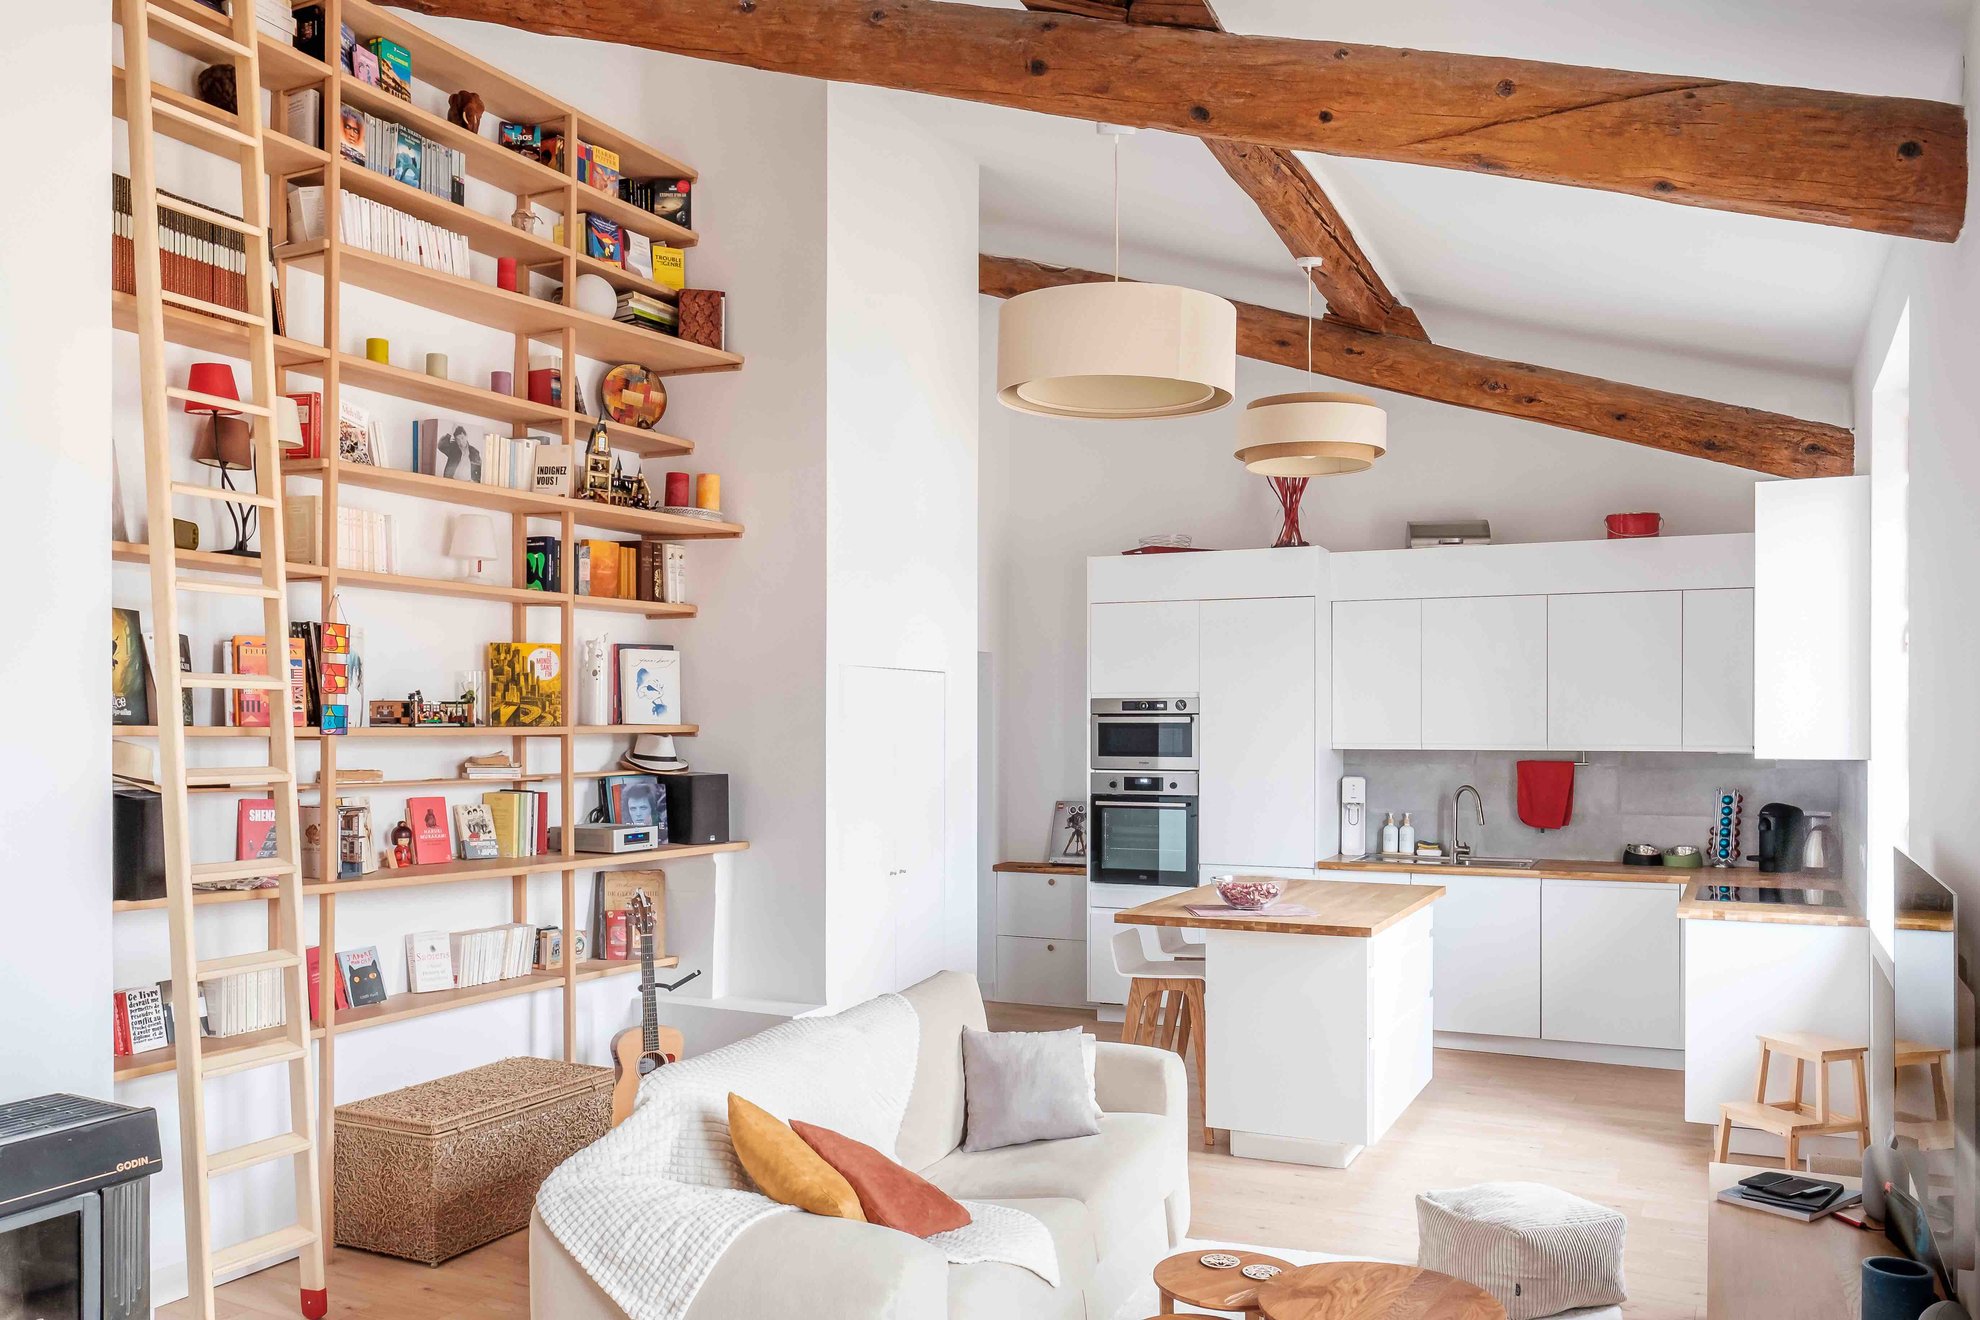 AK-salon-cuisine-bibliotheque-loft-architectureintérieure-design.jpg